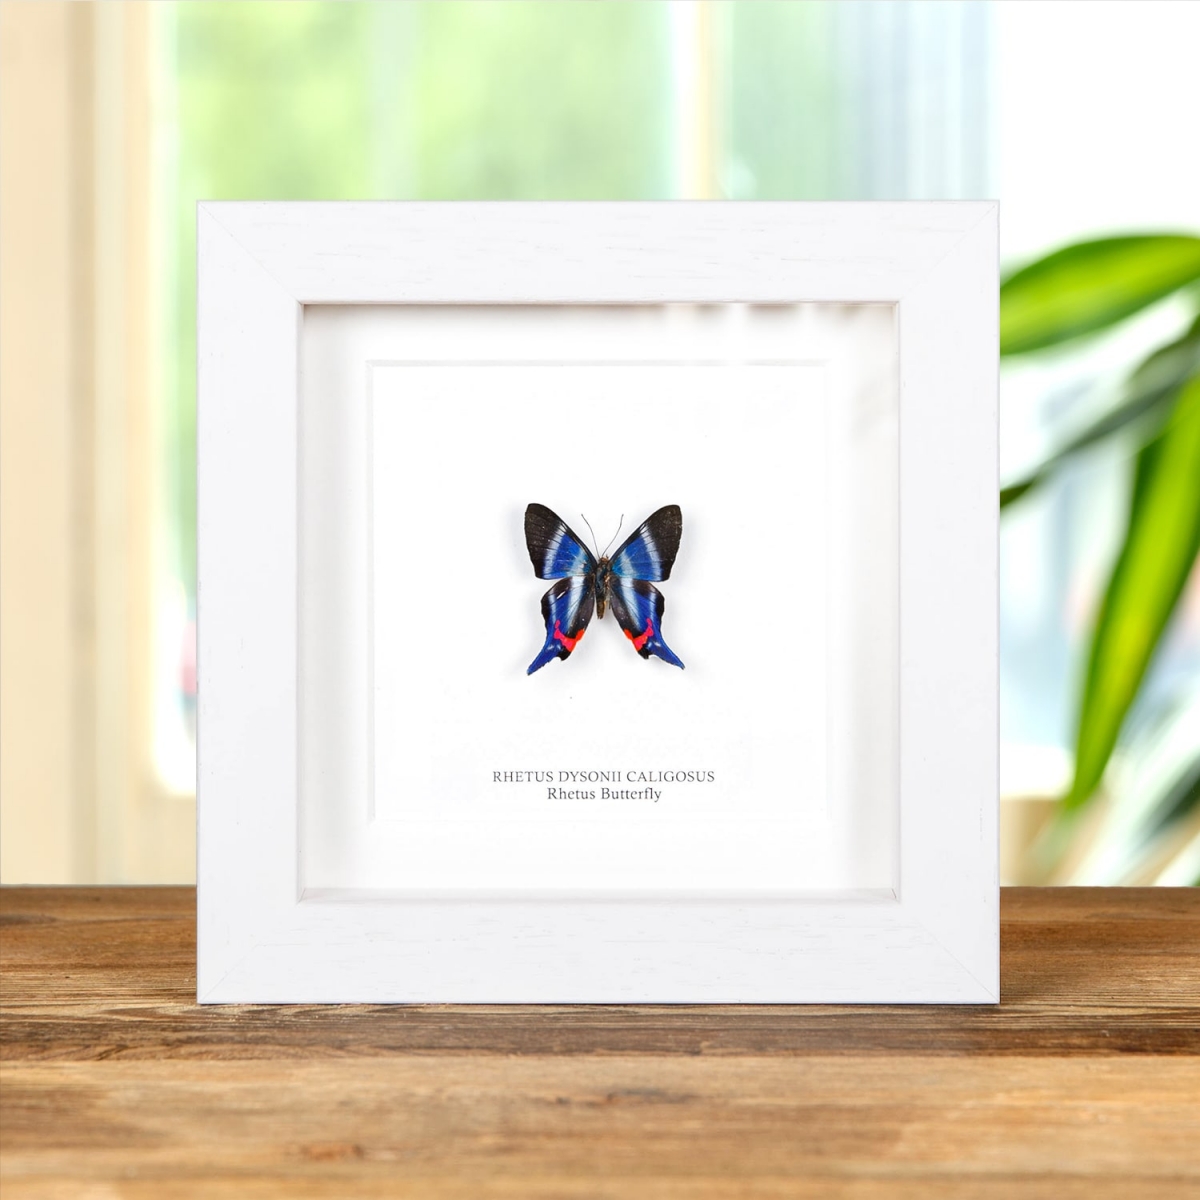 Rhetus Butterfly in Box Frame (Rhetus dysonii caligosus)